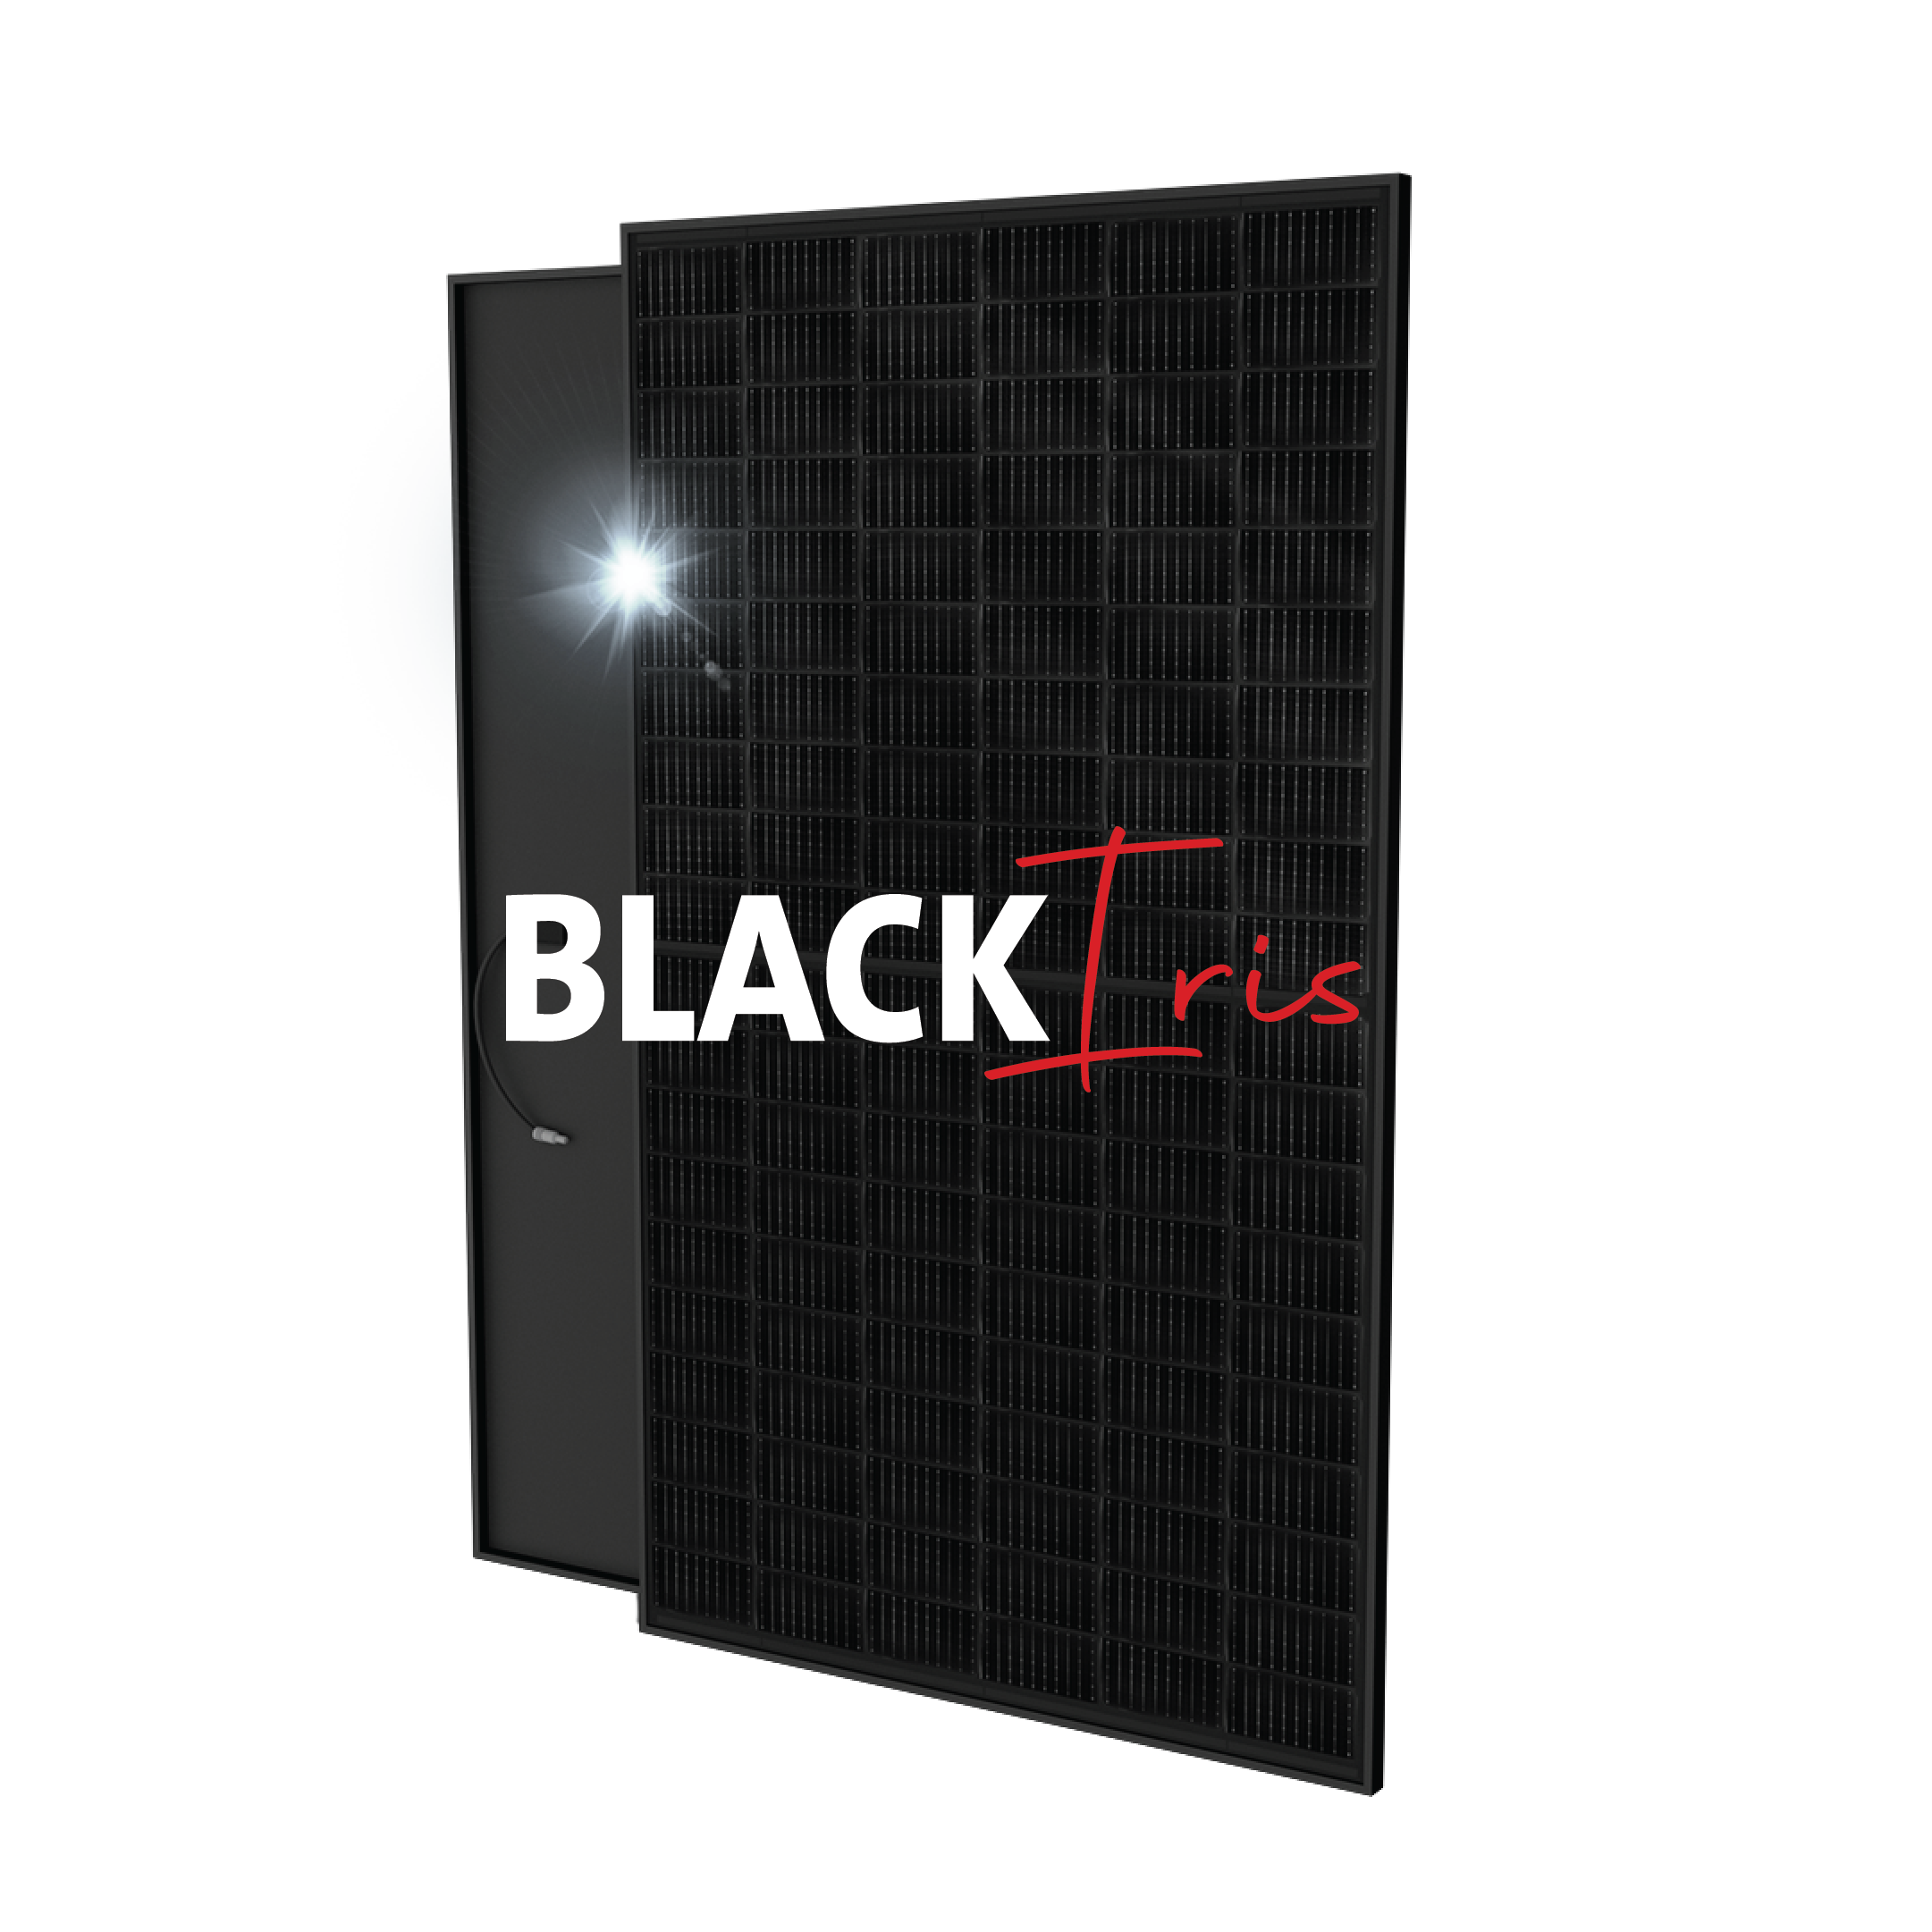 Black-Iris (Full Black) 400-410W